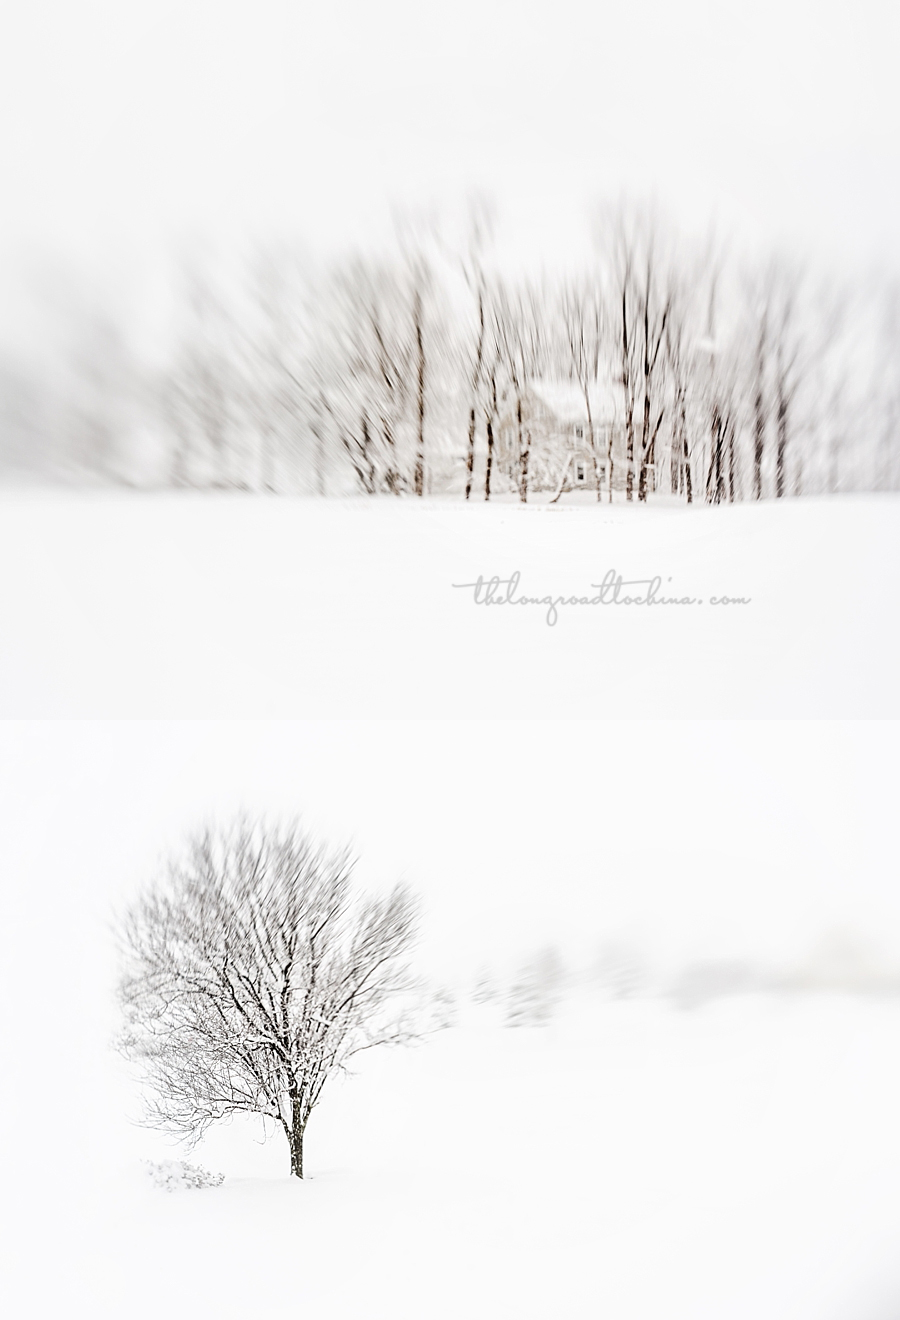 Lensbaby Winter Scenes